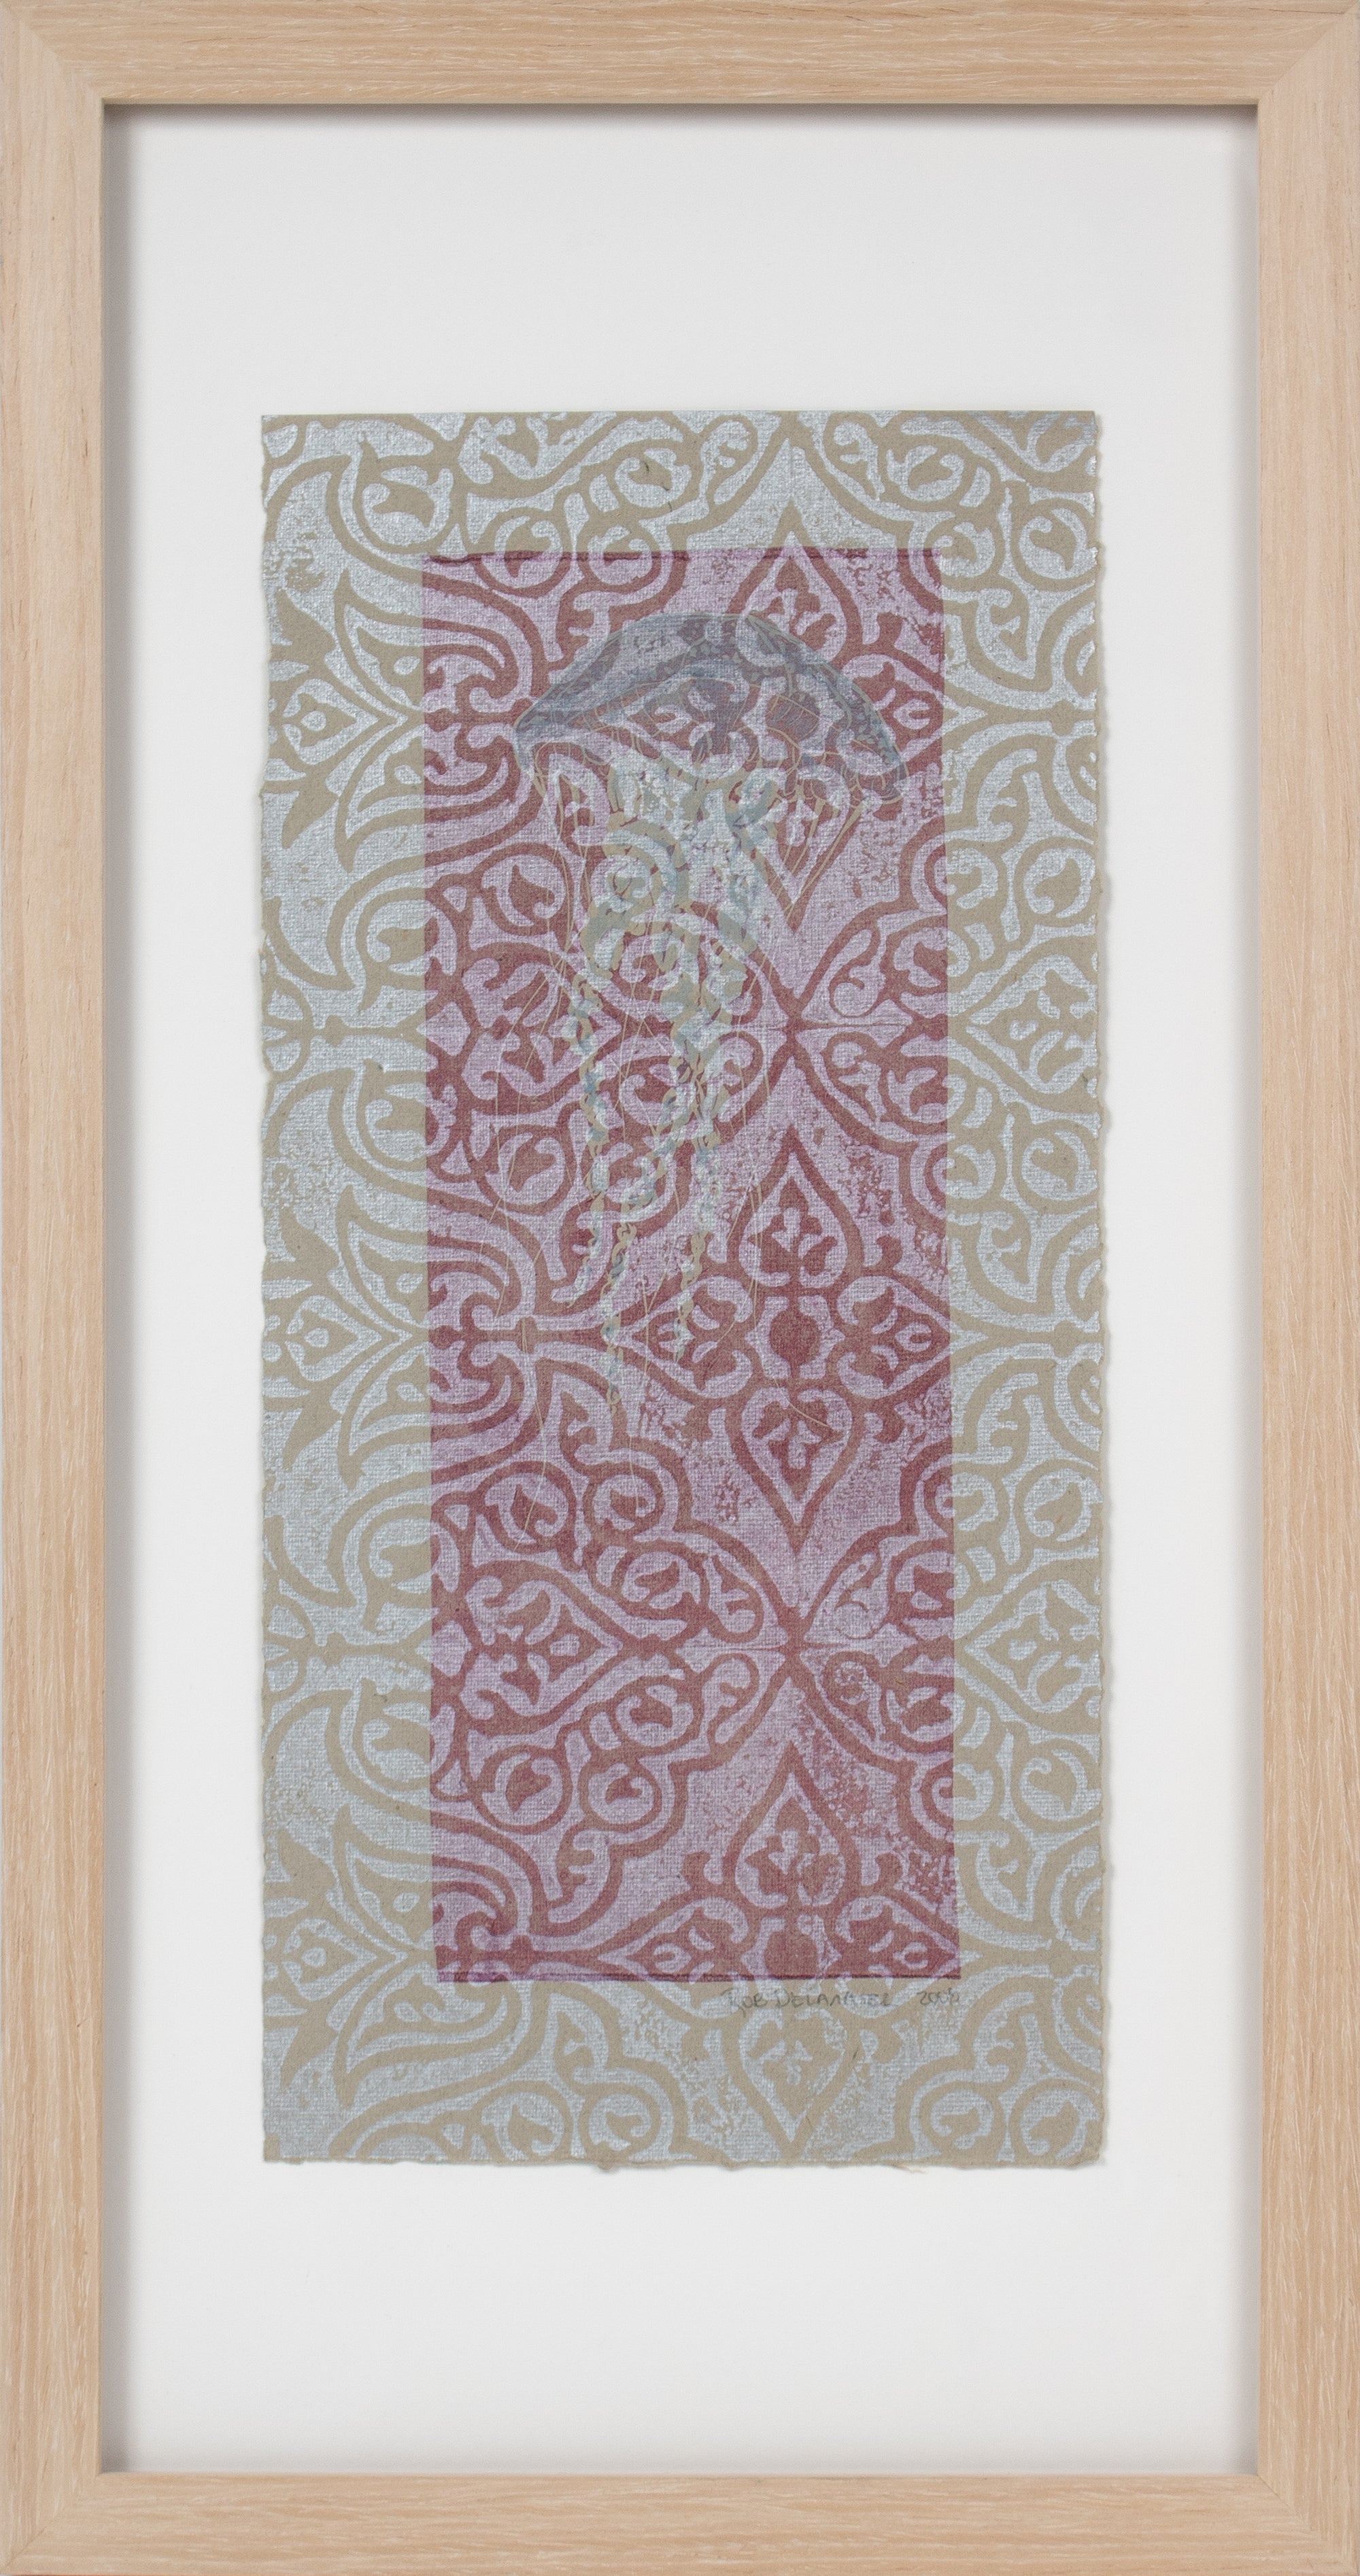 Jellyfish in Abstraction <br>2008 Linoleum Block Print <br><br>#15453